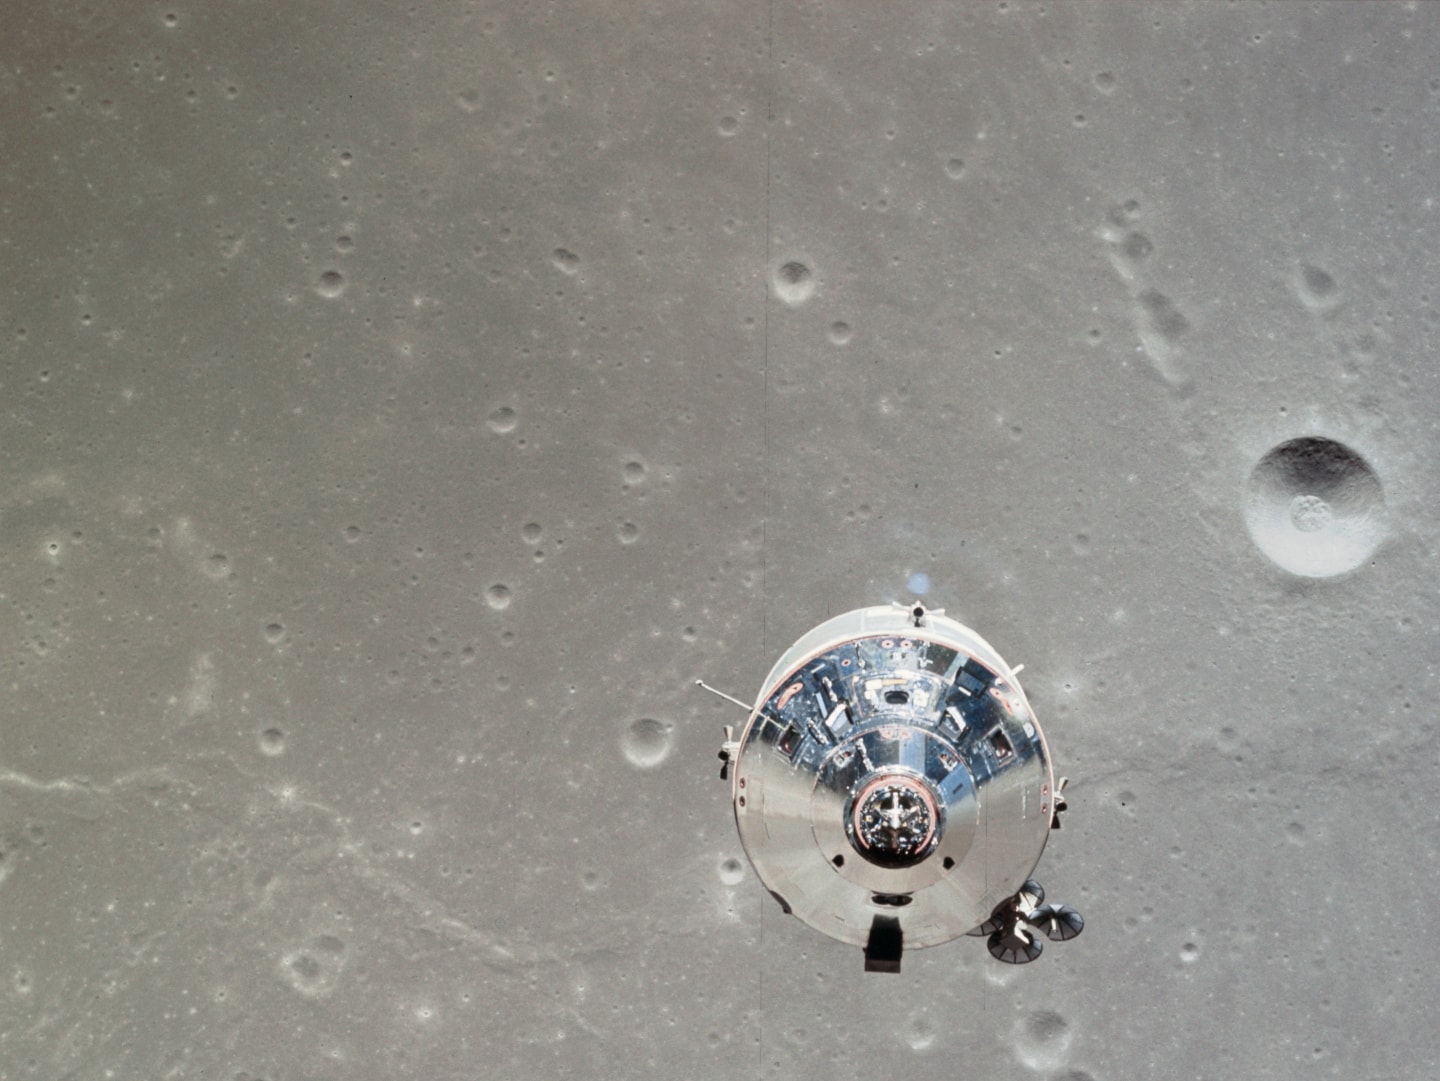 Apollo and moon surface